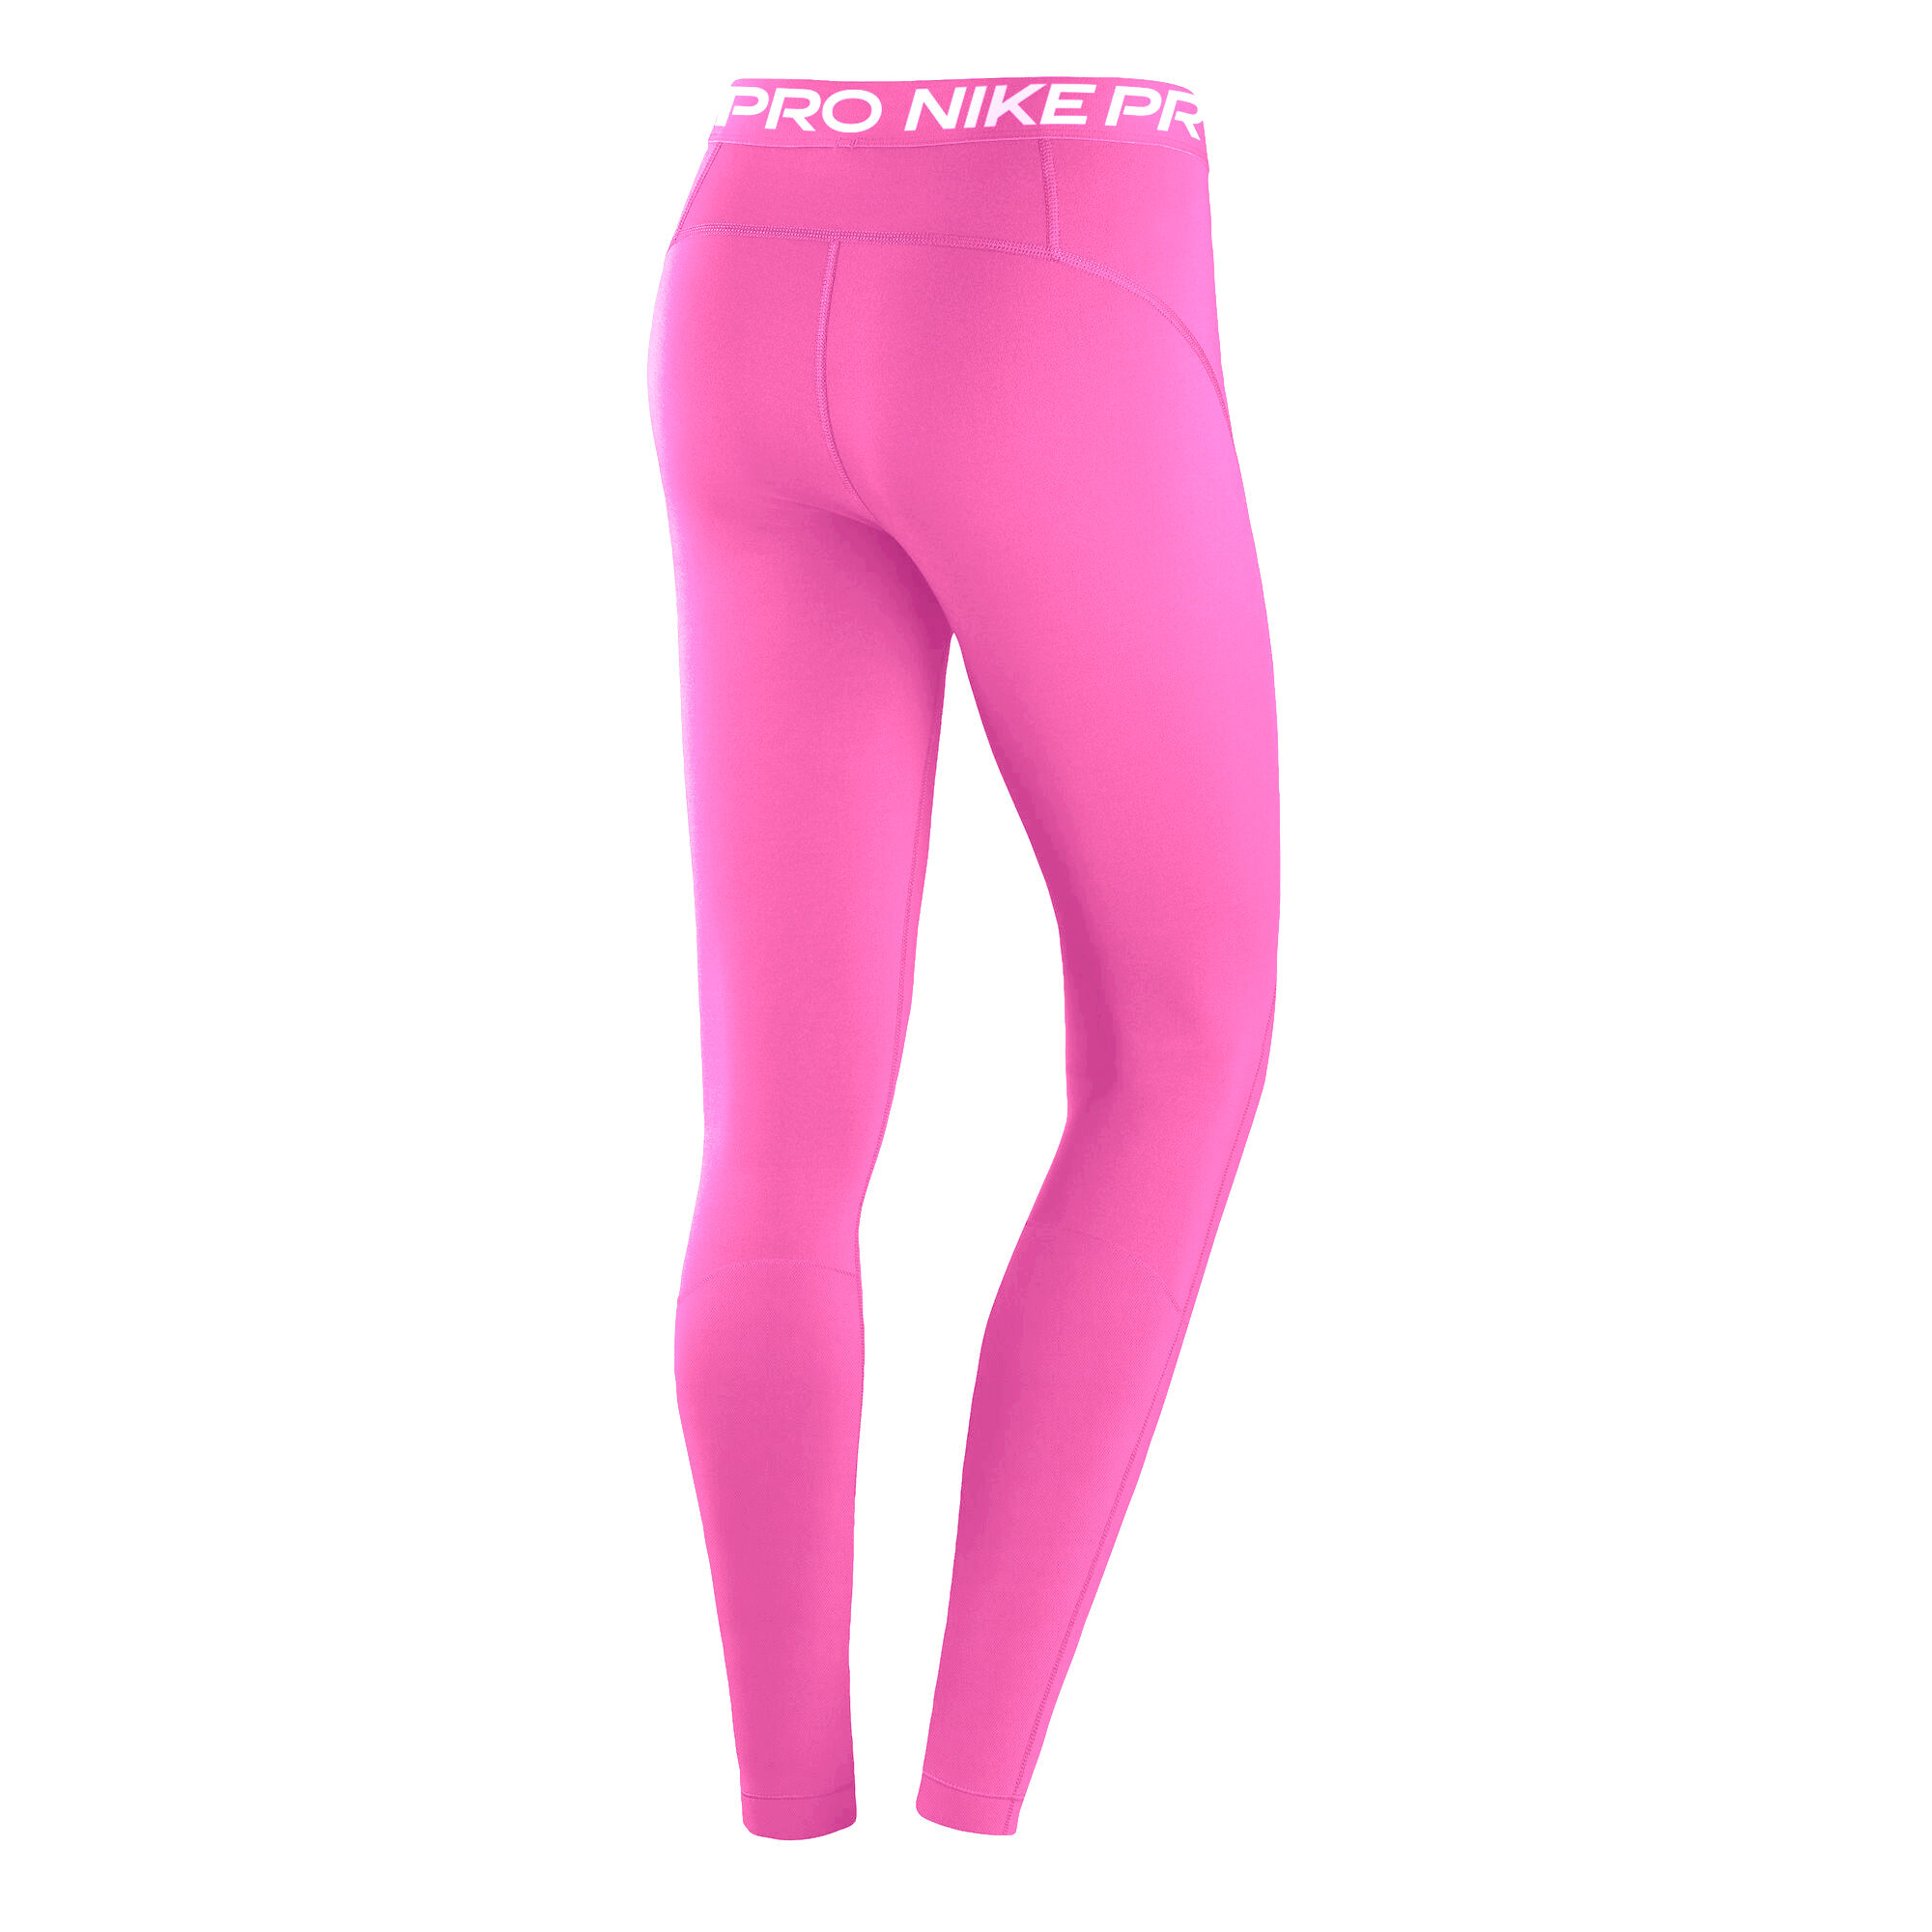 Buy Nike Performance 365 Tight Women Pink, White online